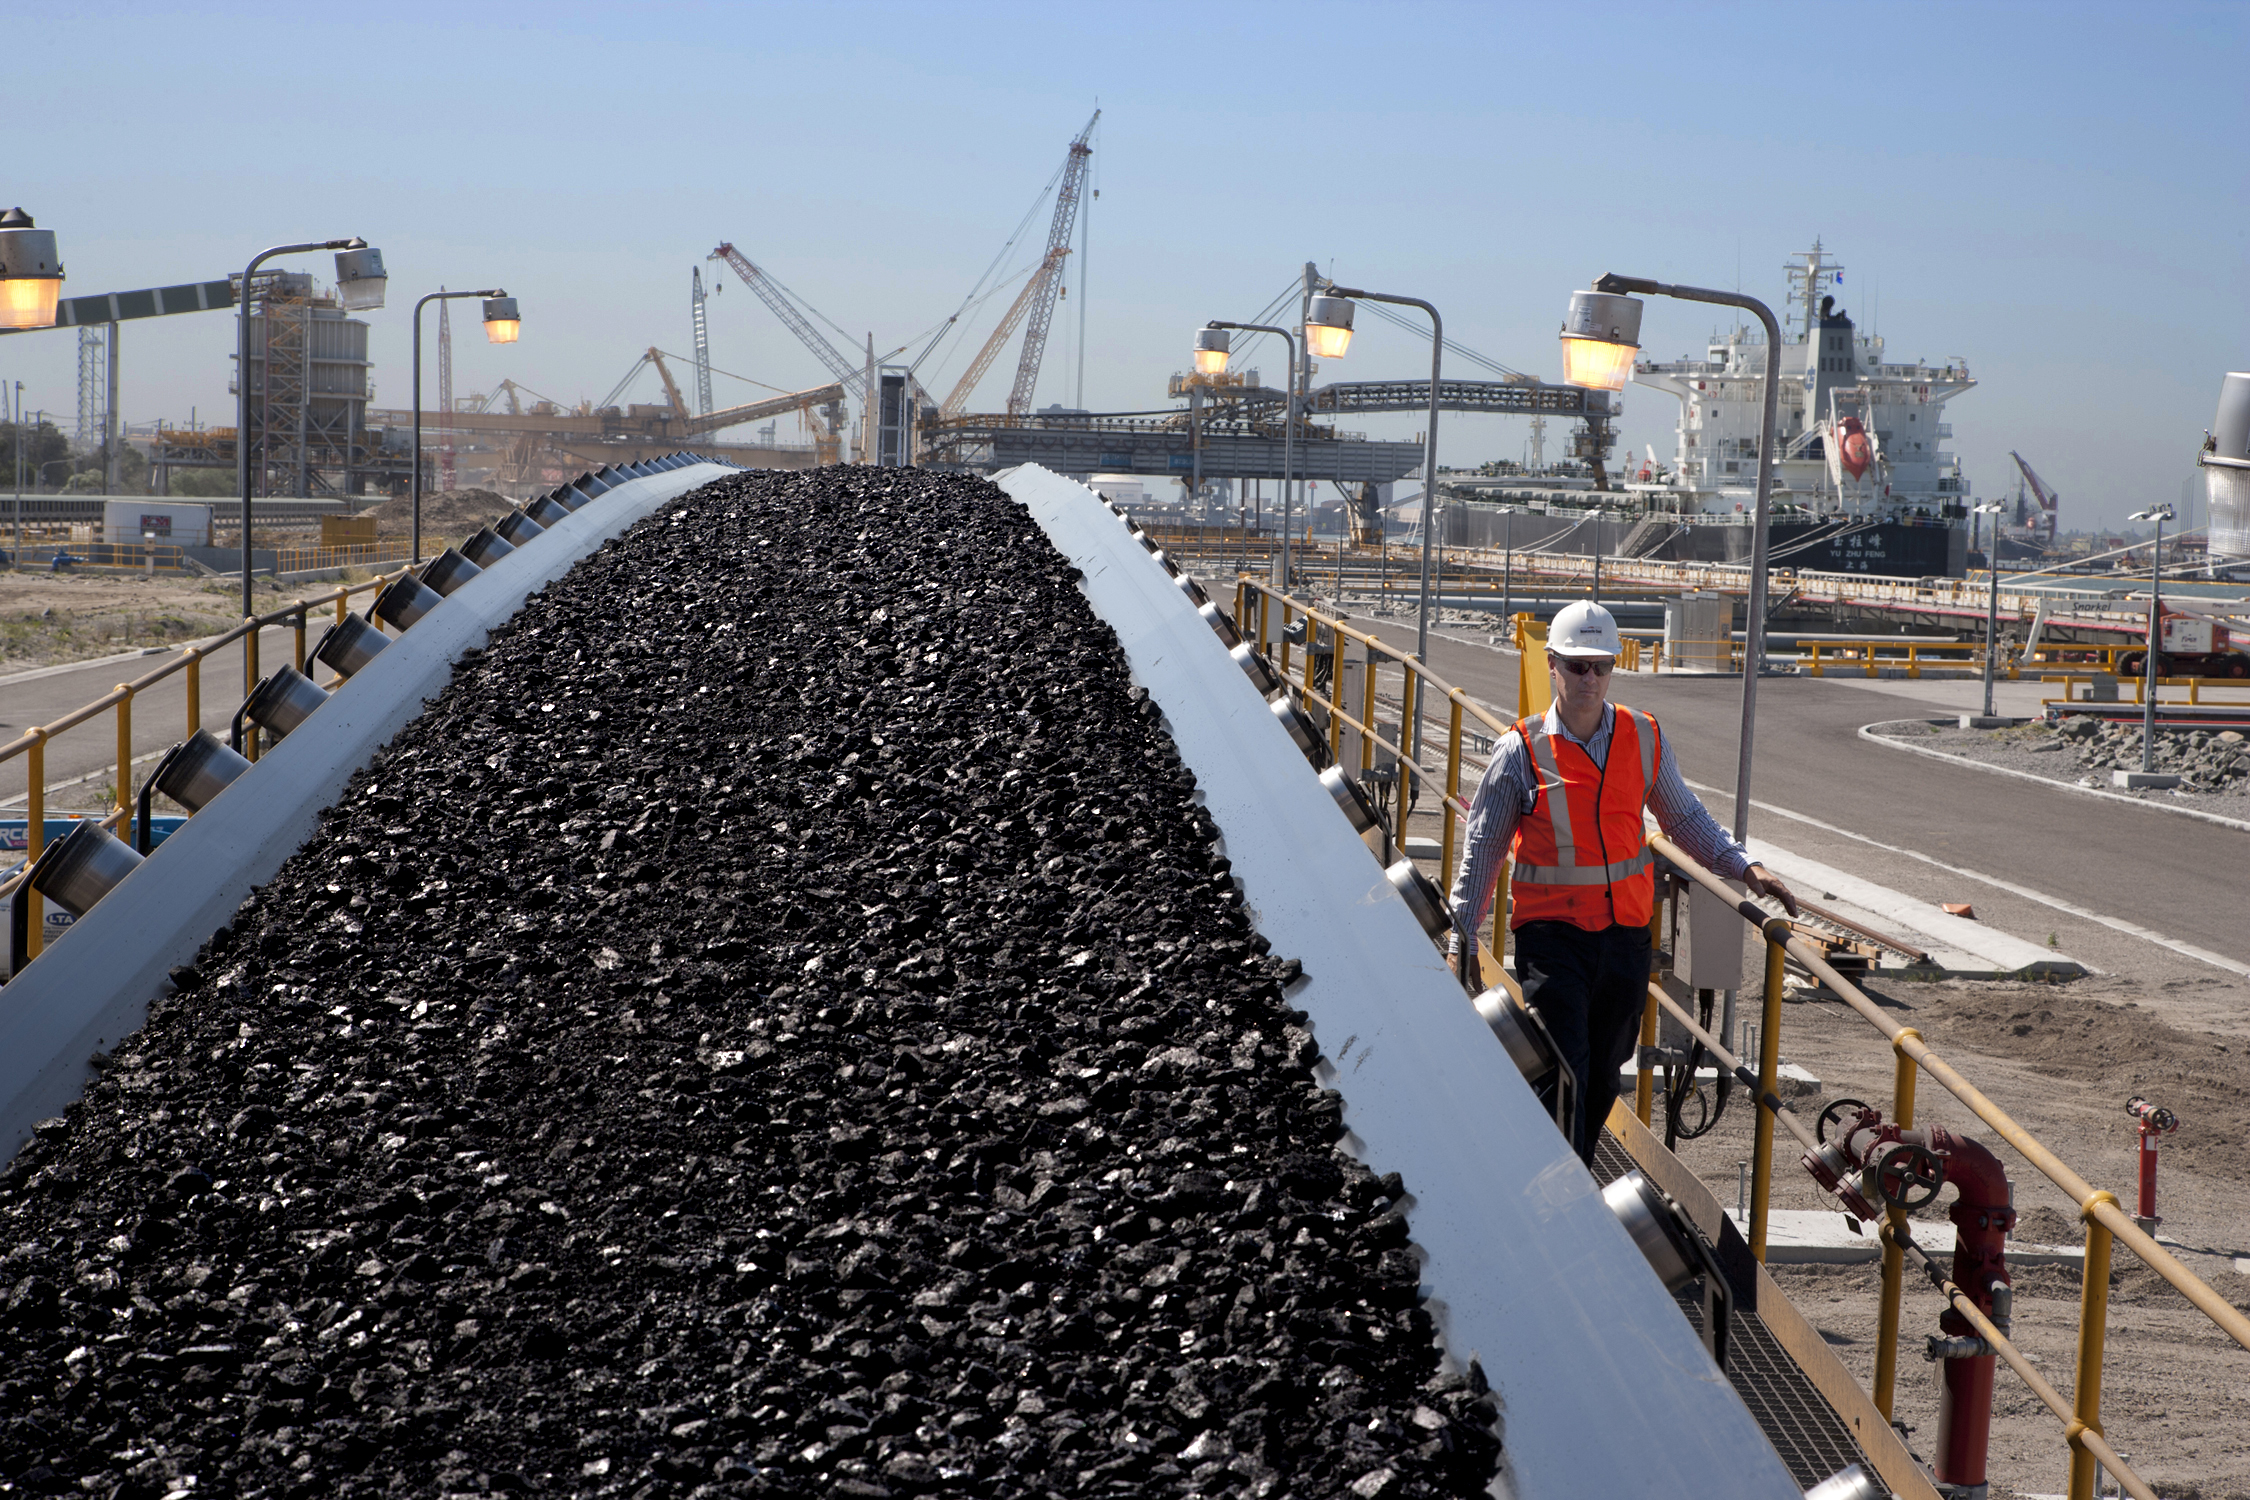 Supervisor Production Coal Mining Maintenance Controller Queensland-iMINCO.net Mining Information